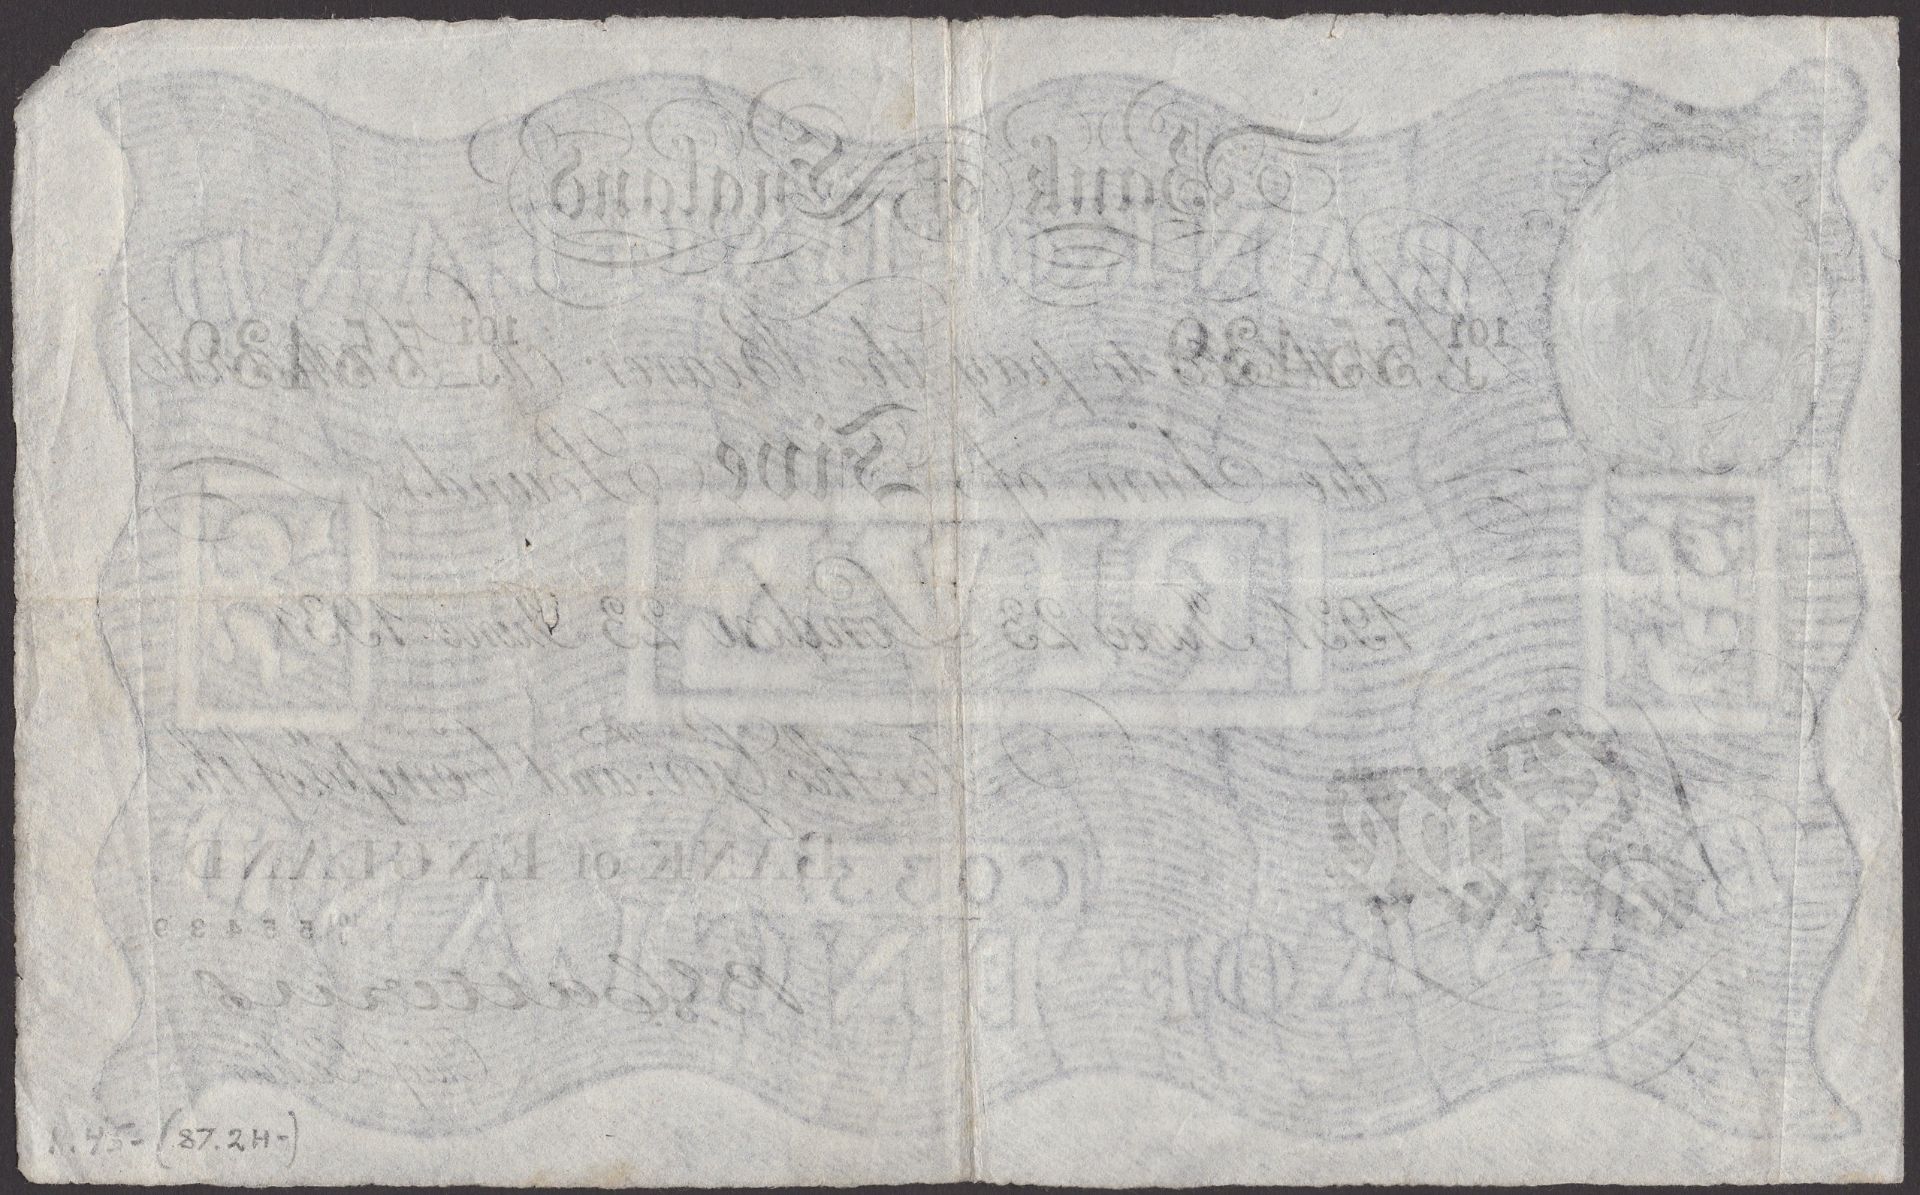 Bank of England, Basil G. Catterns, Â£5, London, 23 June 1931, serial number 101/J 55439, sma... - Image 2 of 2